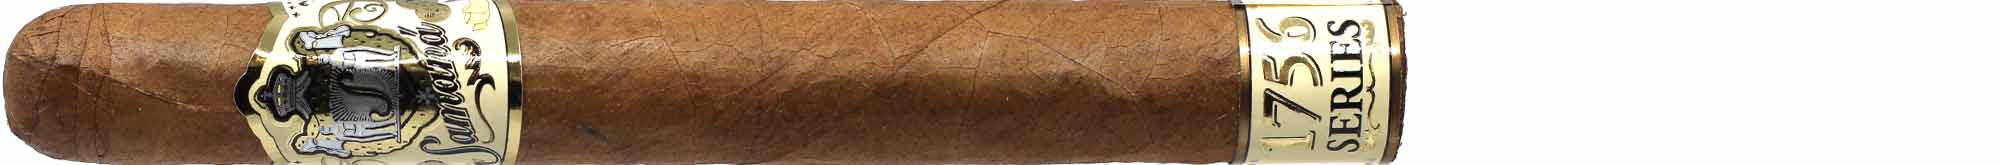 Samaná Zigarren 1756 Corona